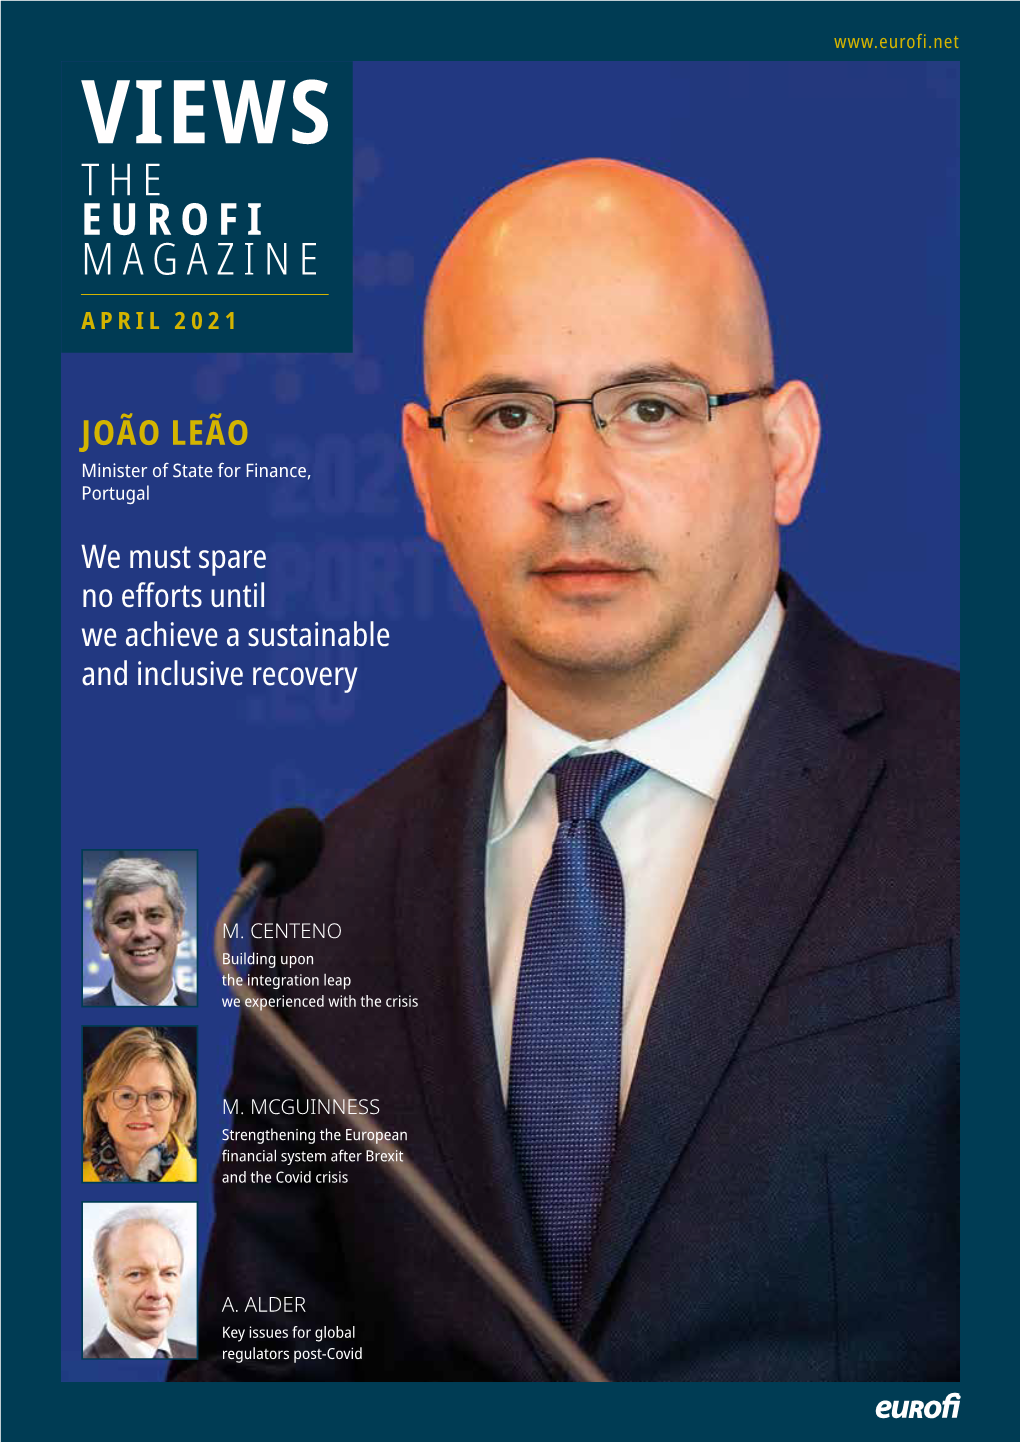 The Eurofi Magazine April 2021